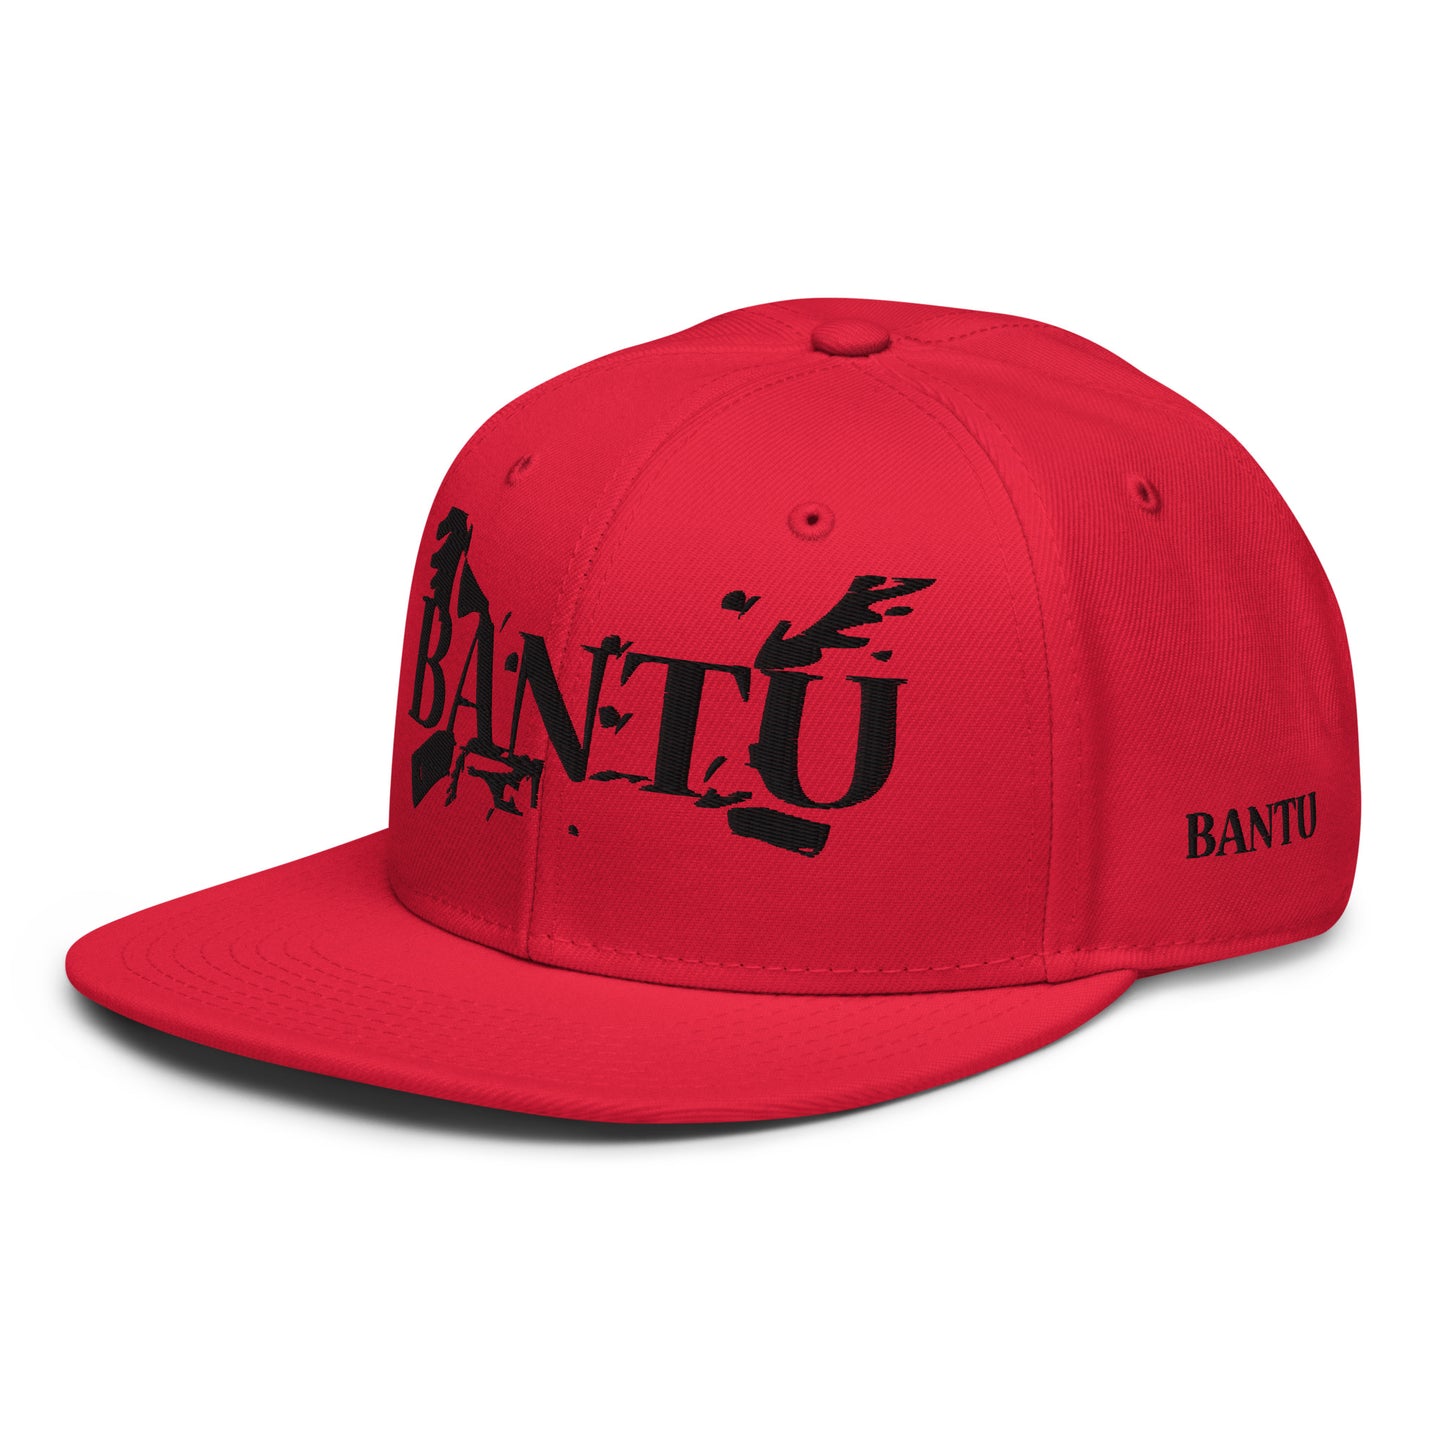 BANTU TU Snapback Hat